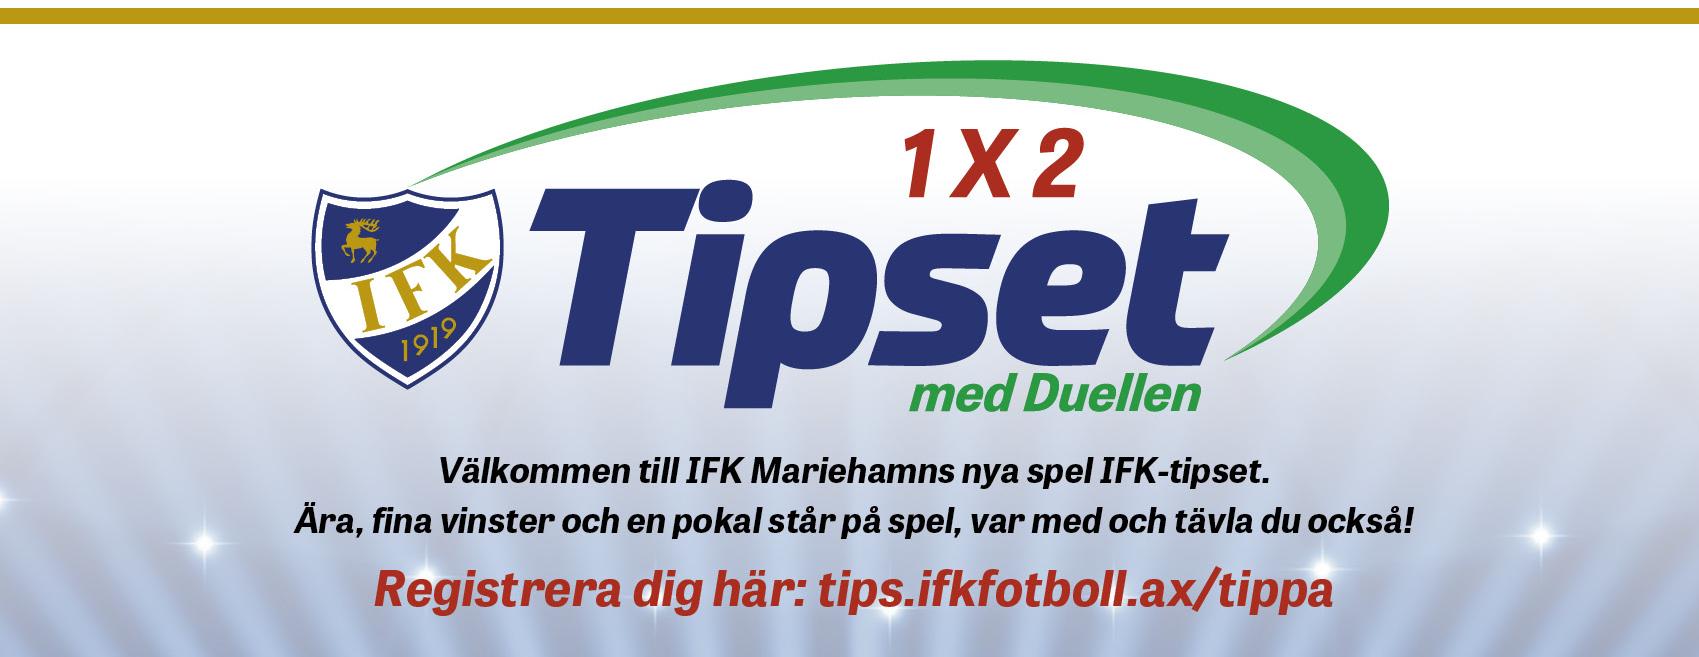 IFK-Tipset annons